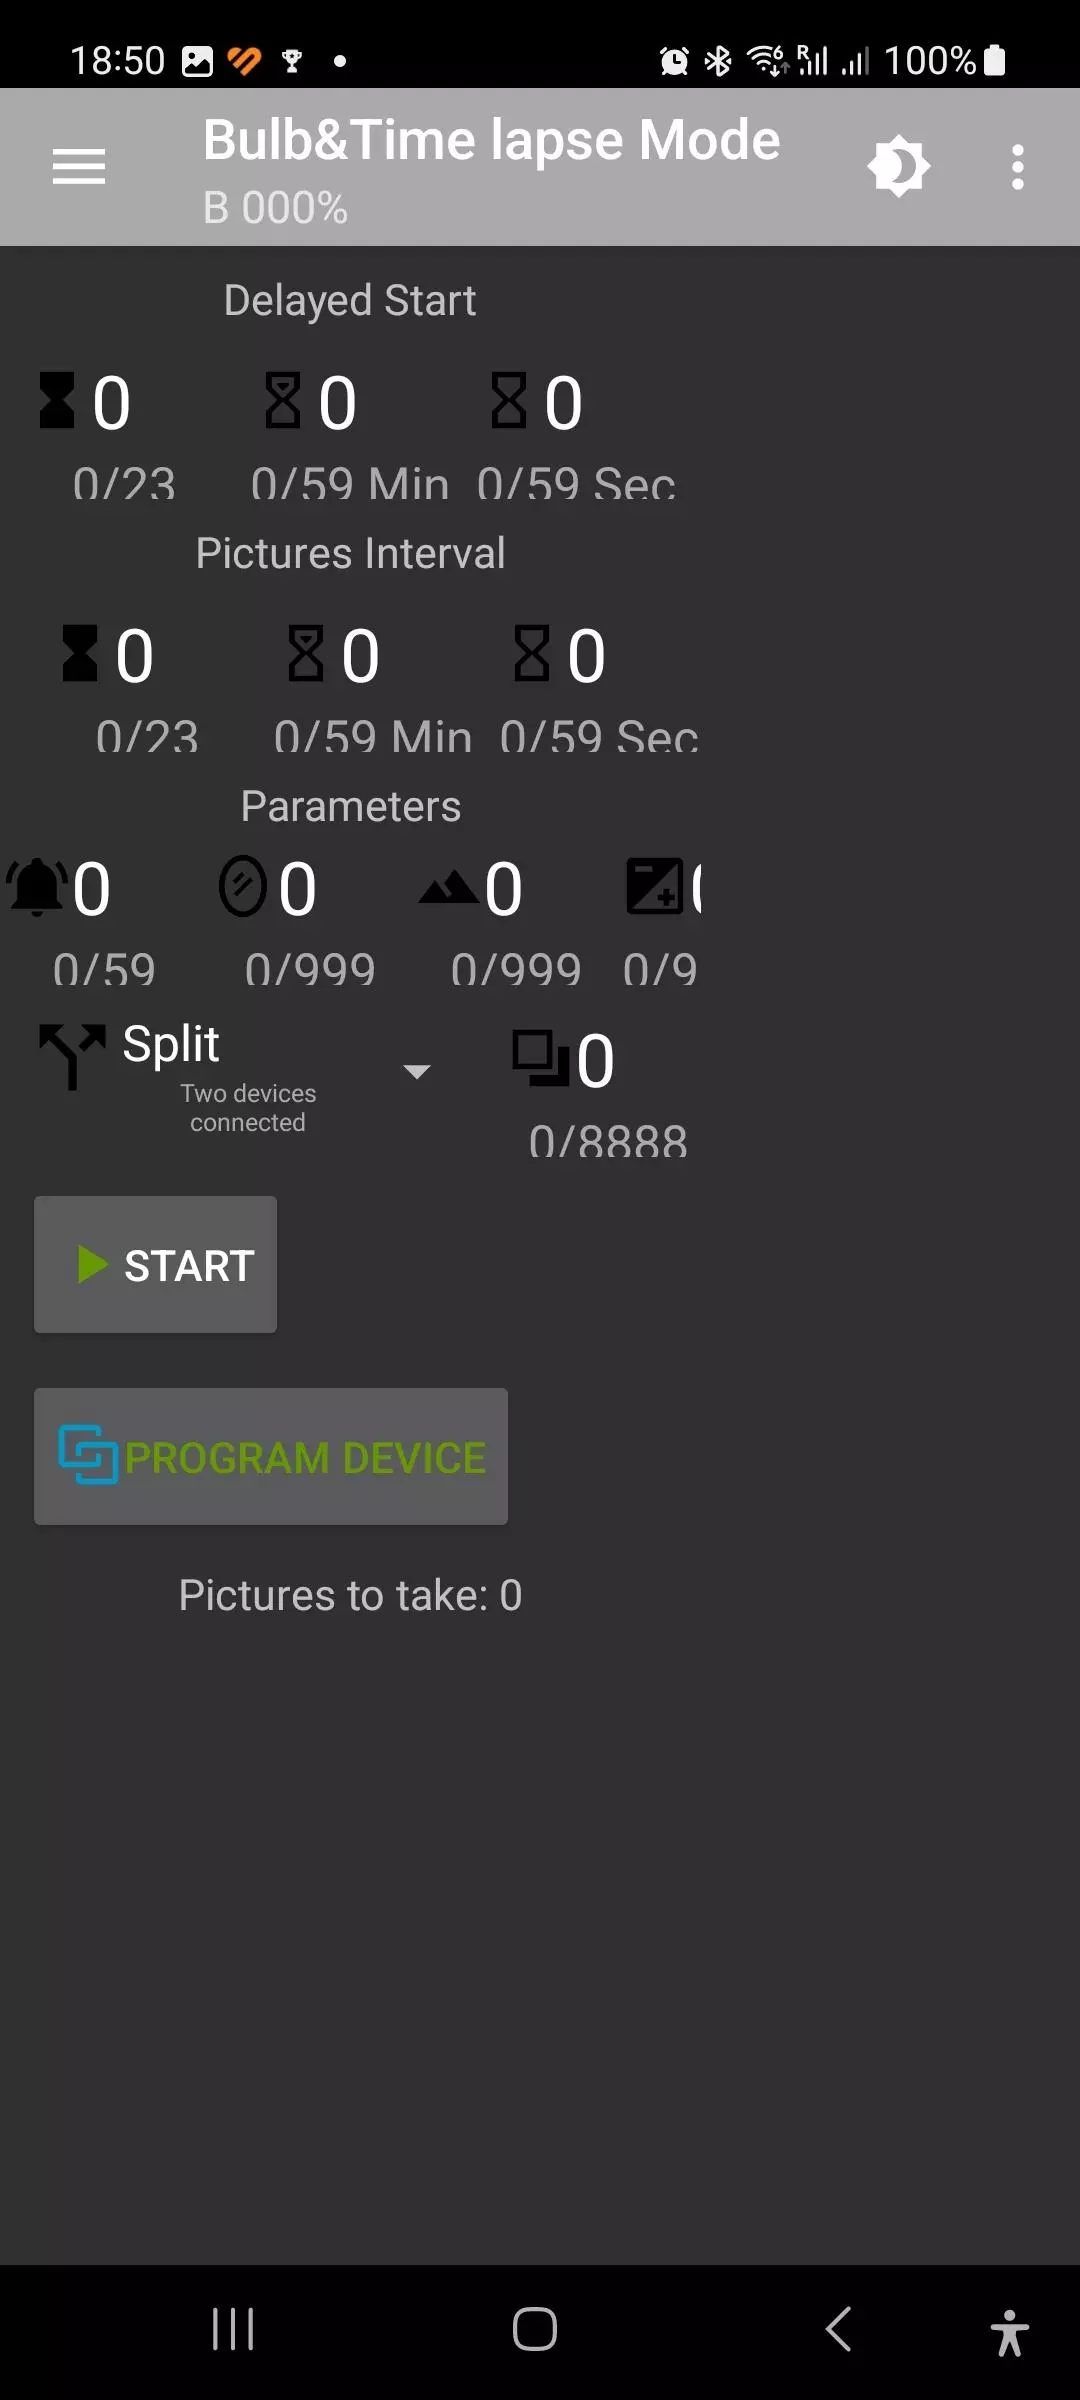 Remote DSLR Android App Bulb & Timelapse Mode